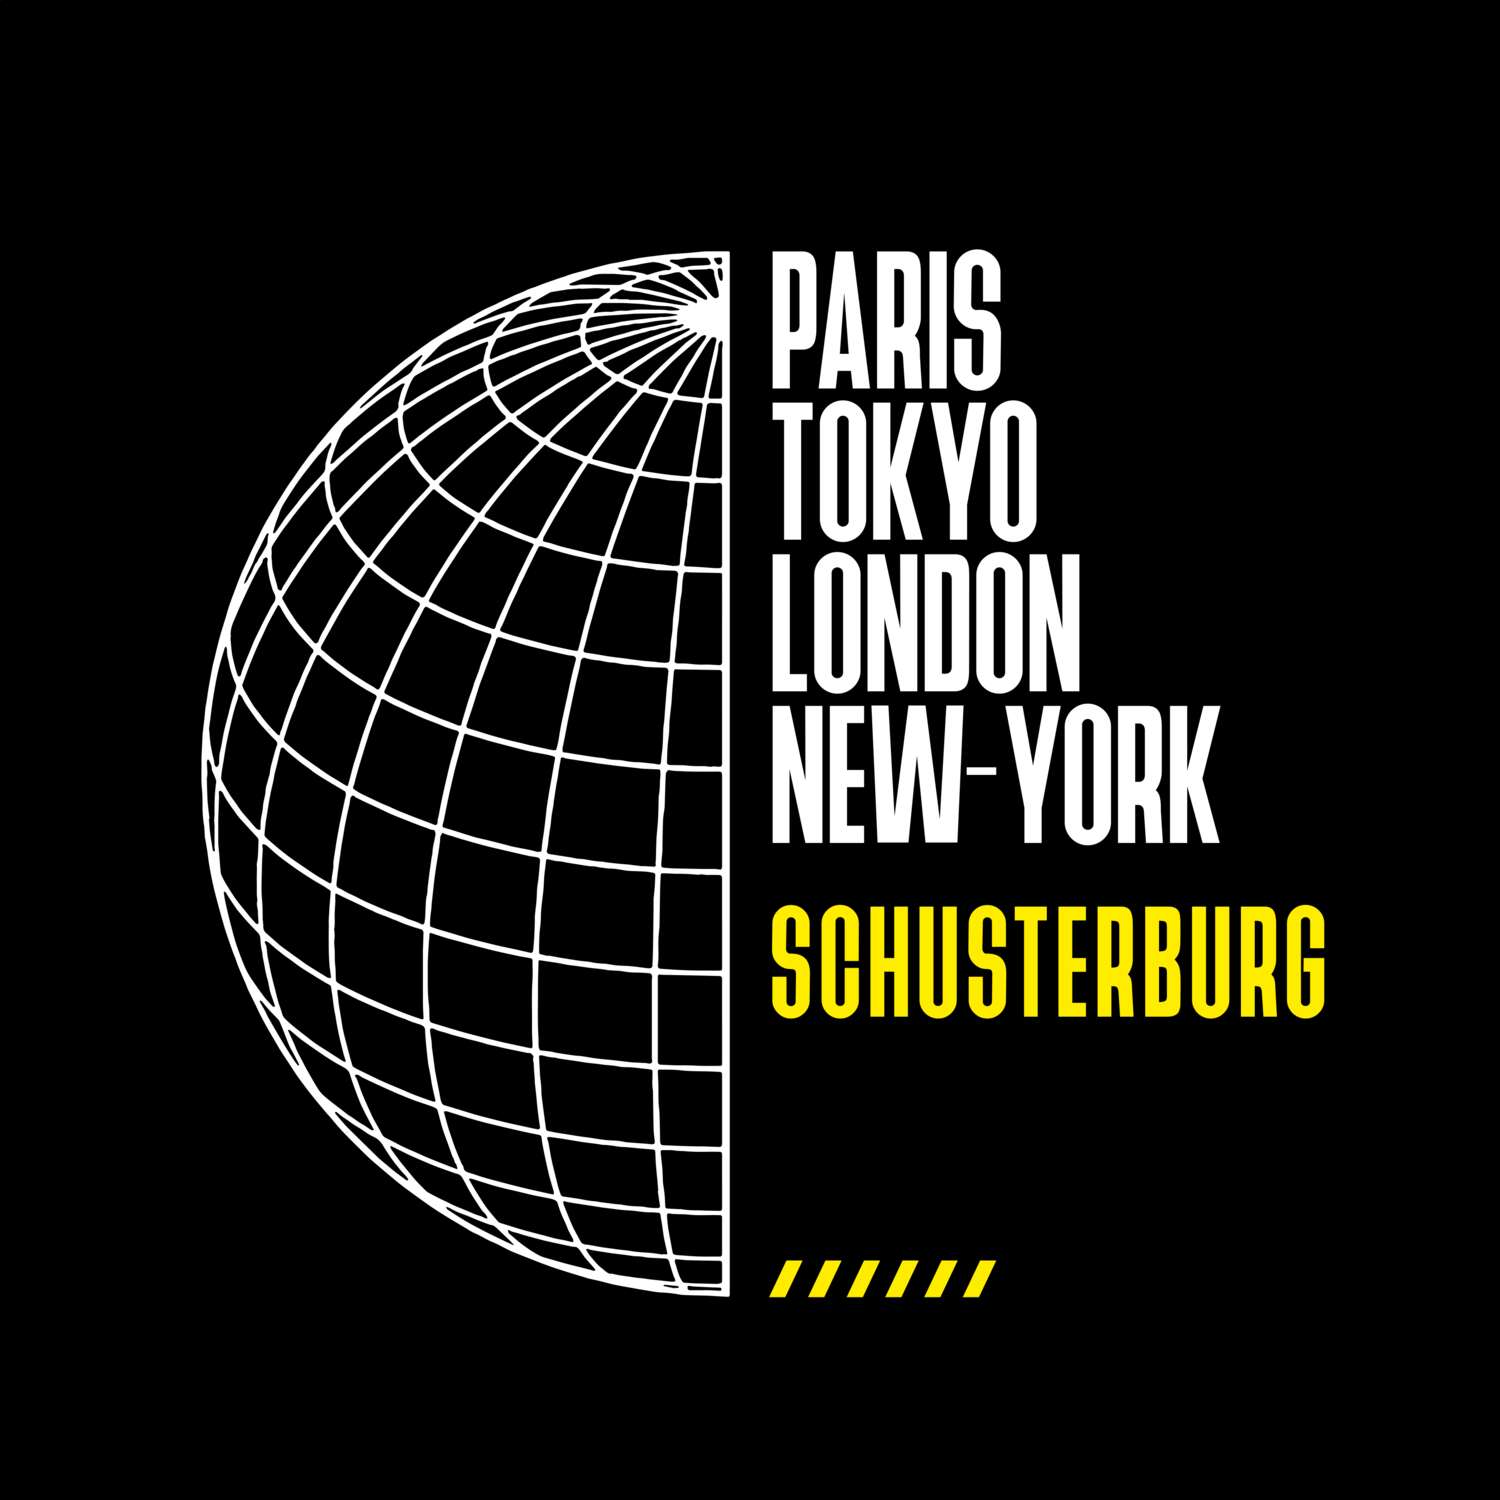 Schusterburg T-Shirt »Paris Tokyo London«